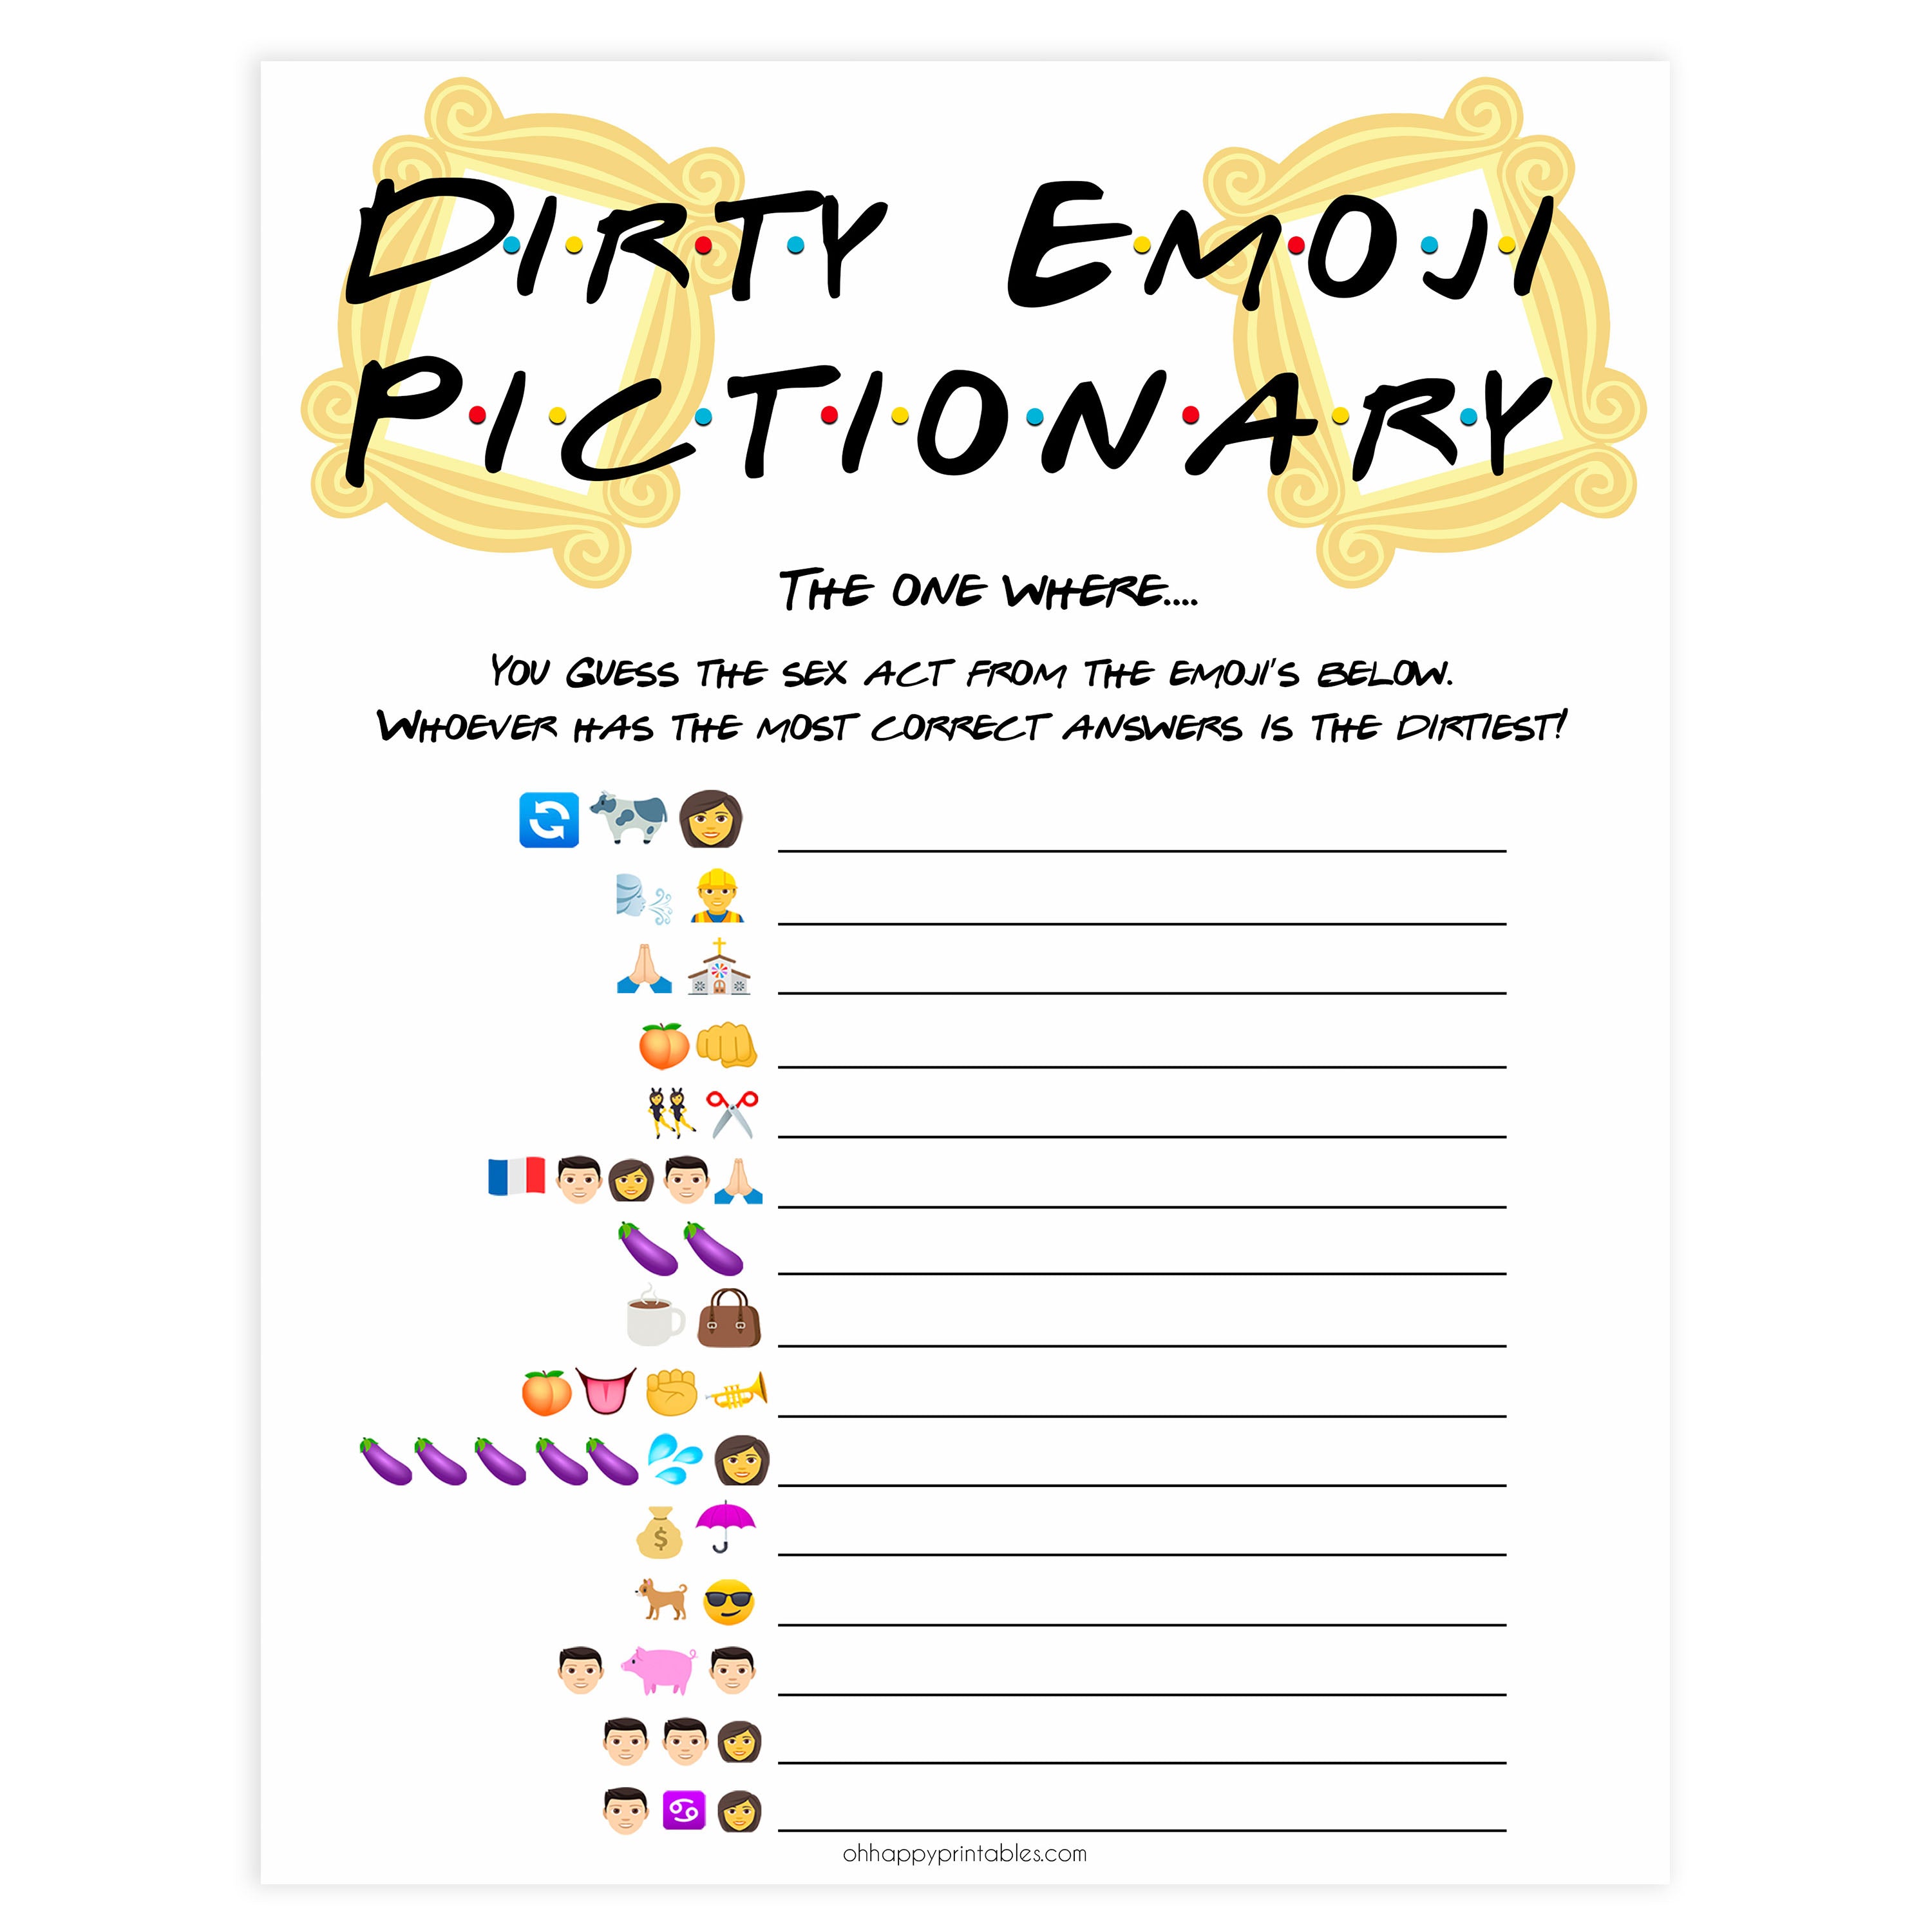 dirty emoji